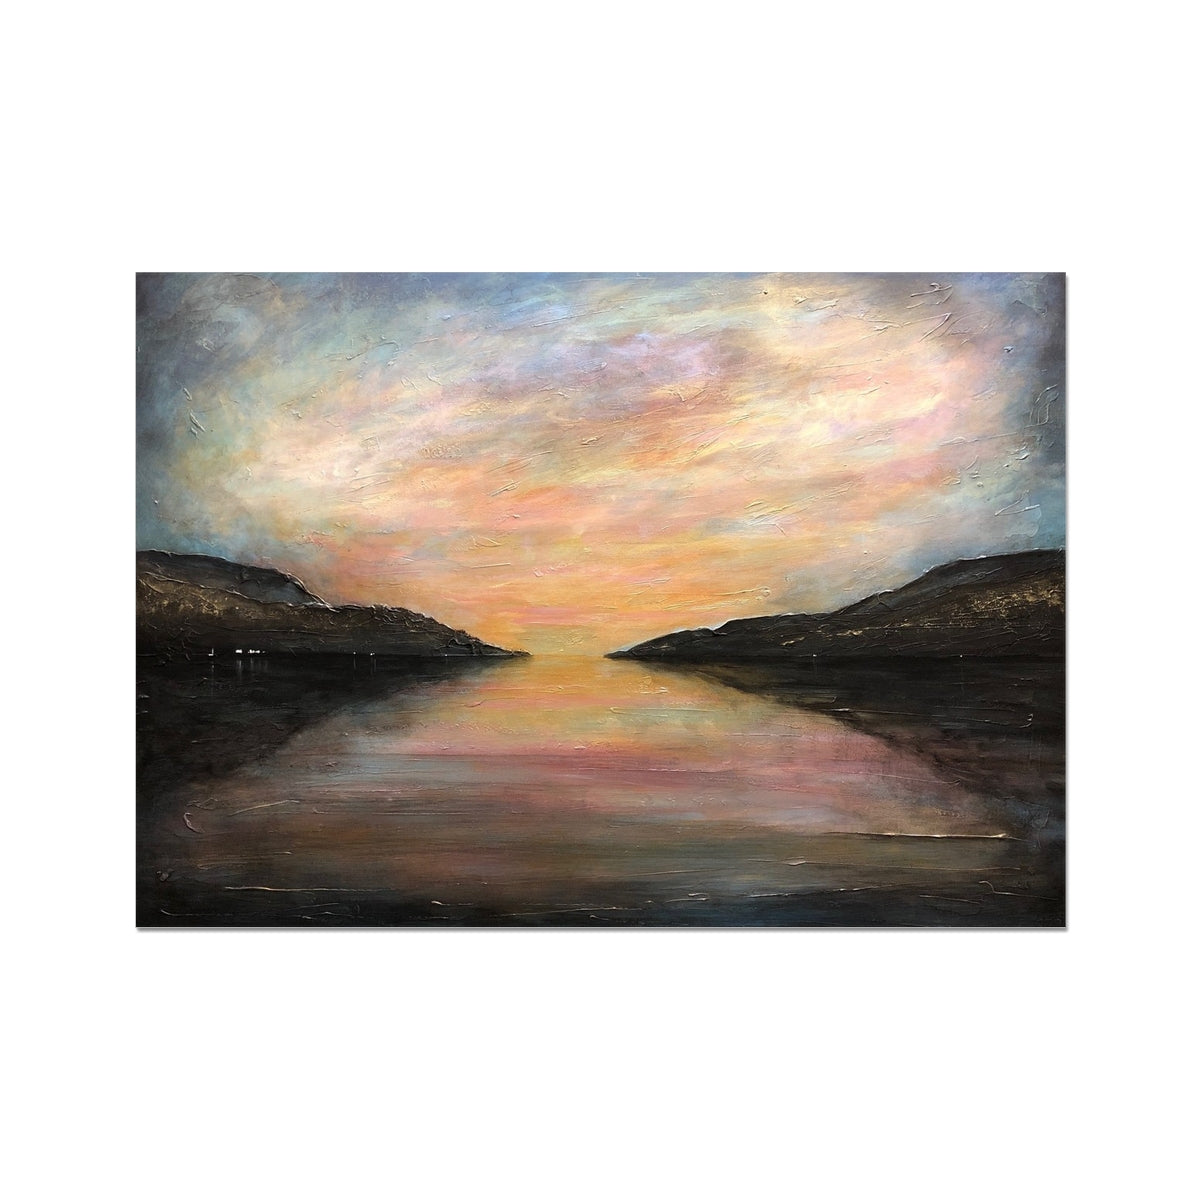 Loch Ness Glow Painting | Fine Art Prints From Scotland-Unframed Prints-Scottish Lochs & Mountains Art Gallery-A2 Landscape-Paintings, Prints, Homeware, Art Gifts From Scotland By Scottish Artist Kevin Hunter